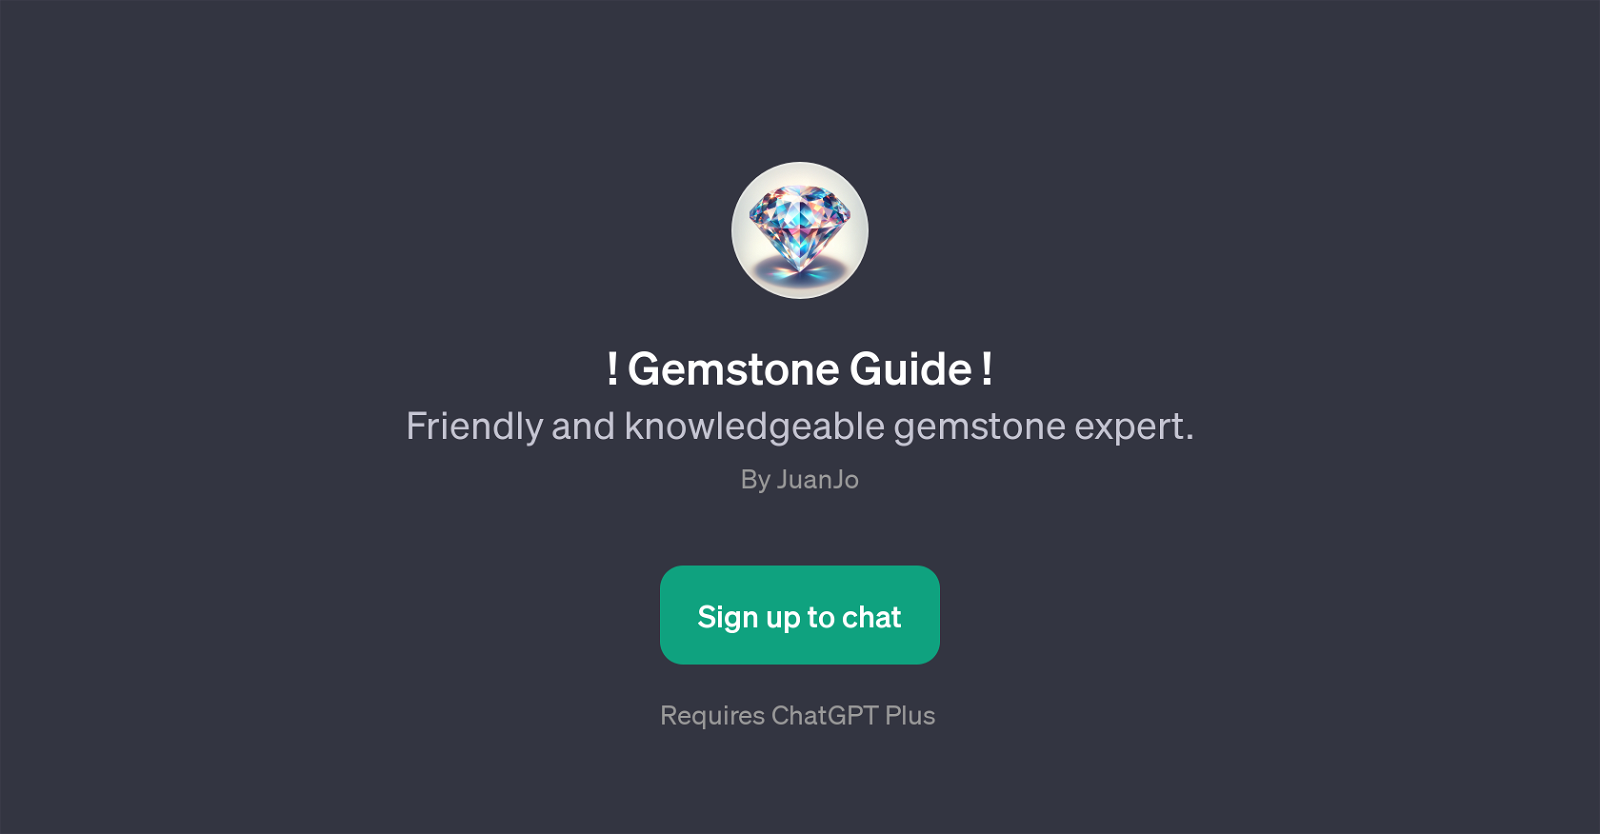 Gemstone Guide website